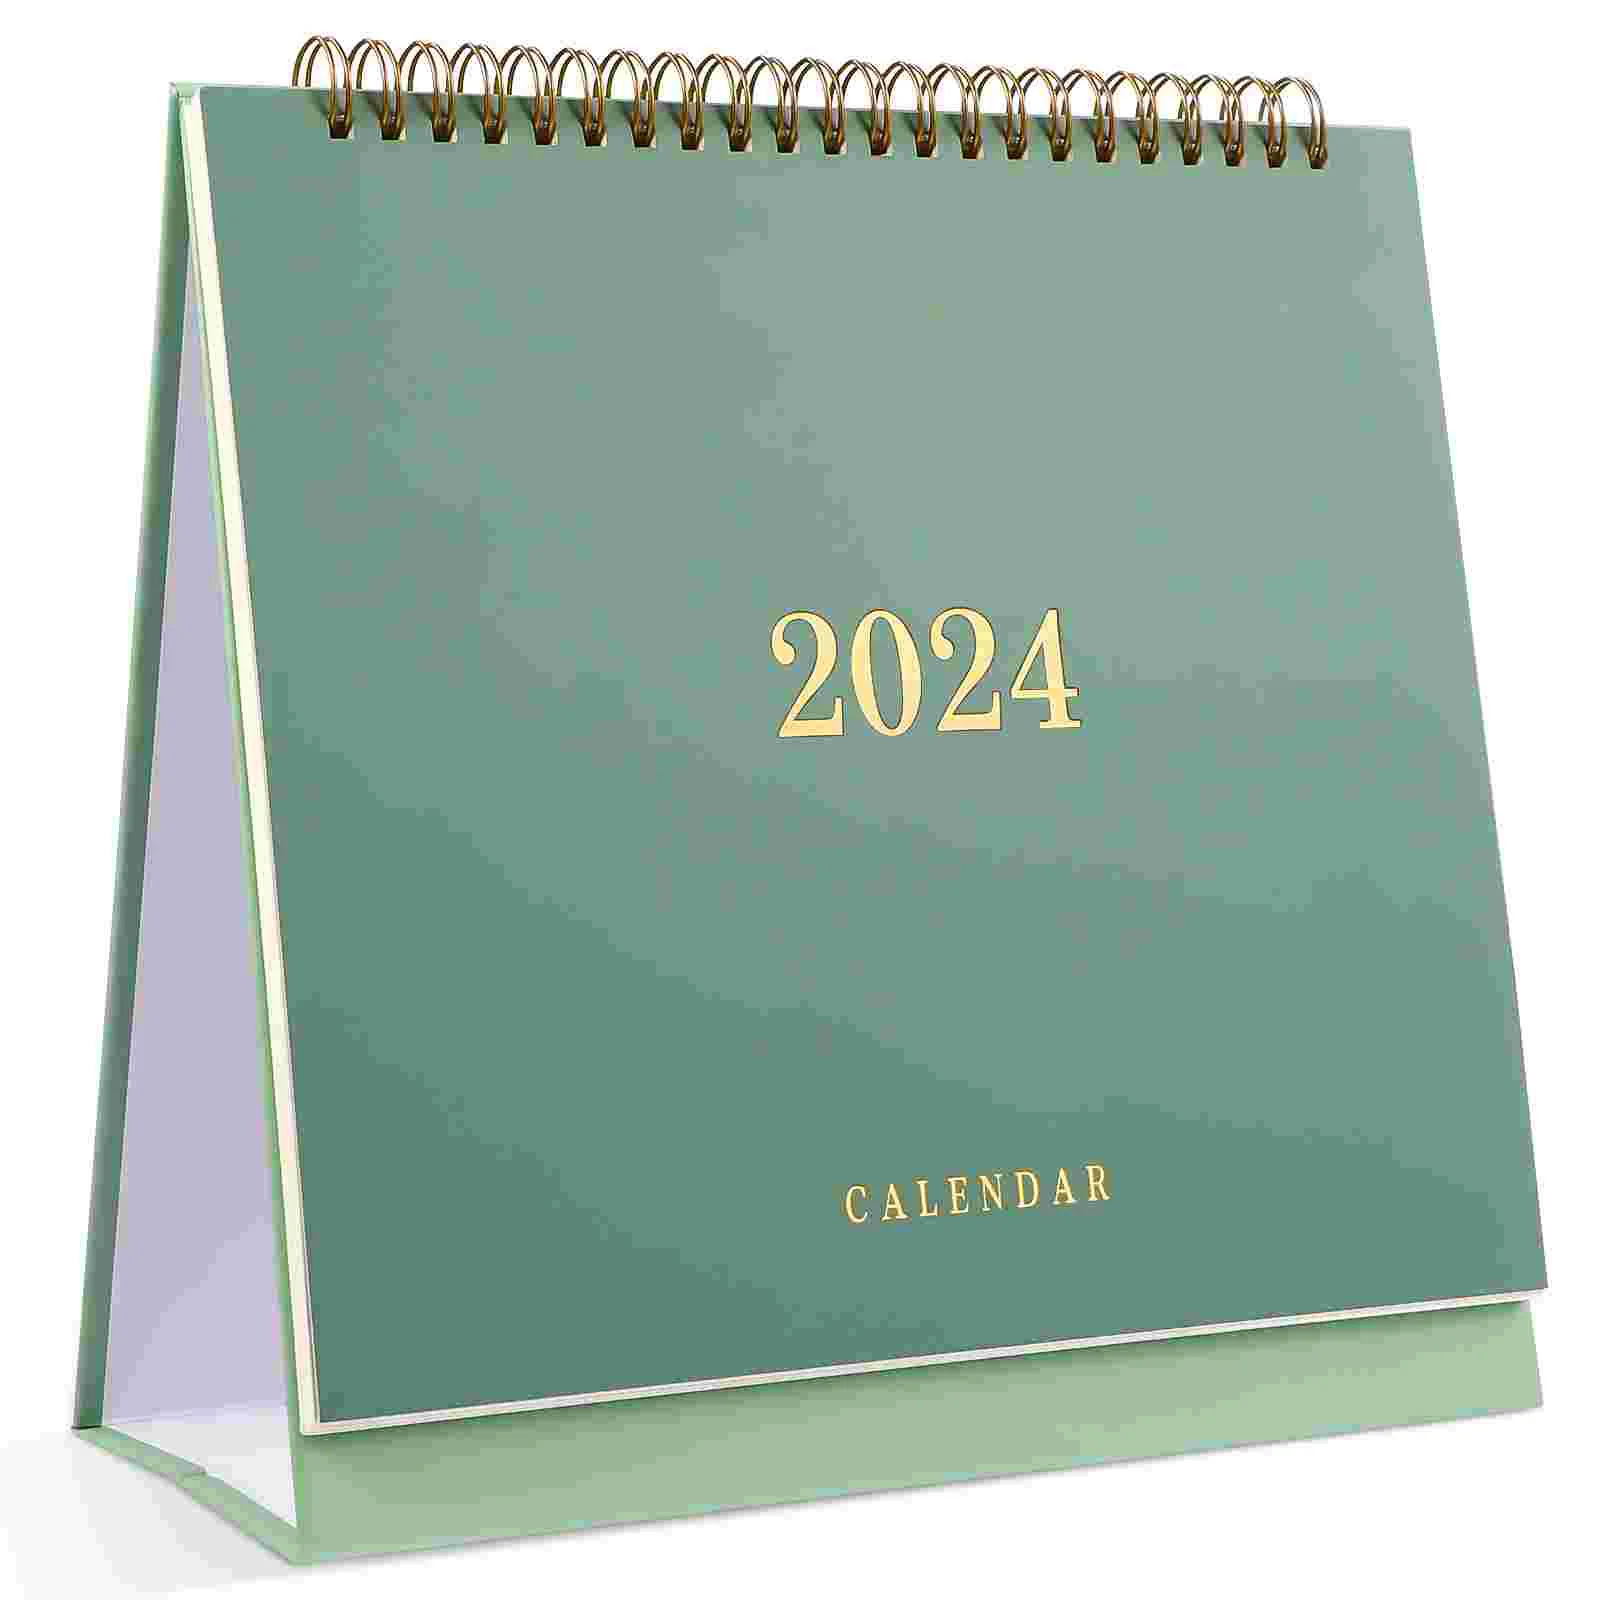 

Calendar 2024 De Adviento Maquillaje Desk Planner Monthly Turn The Page Planning